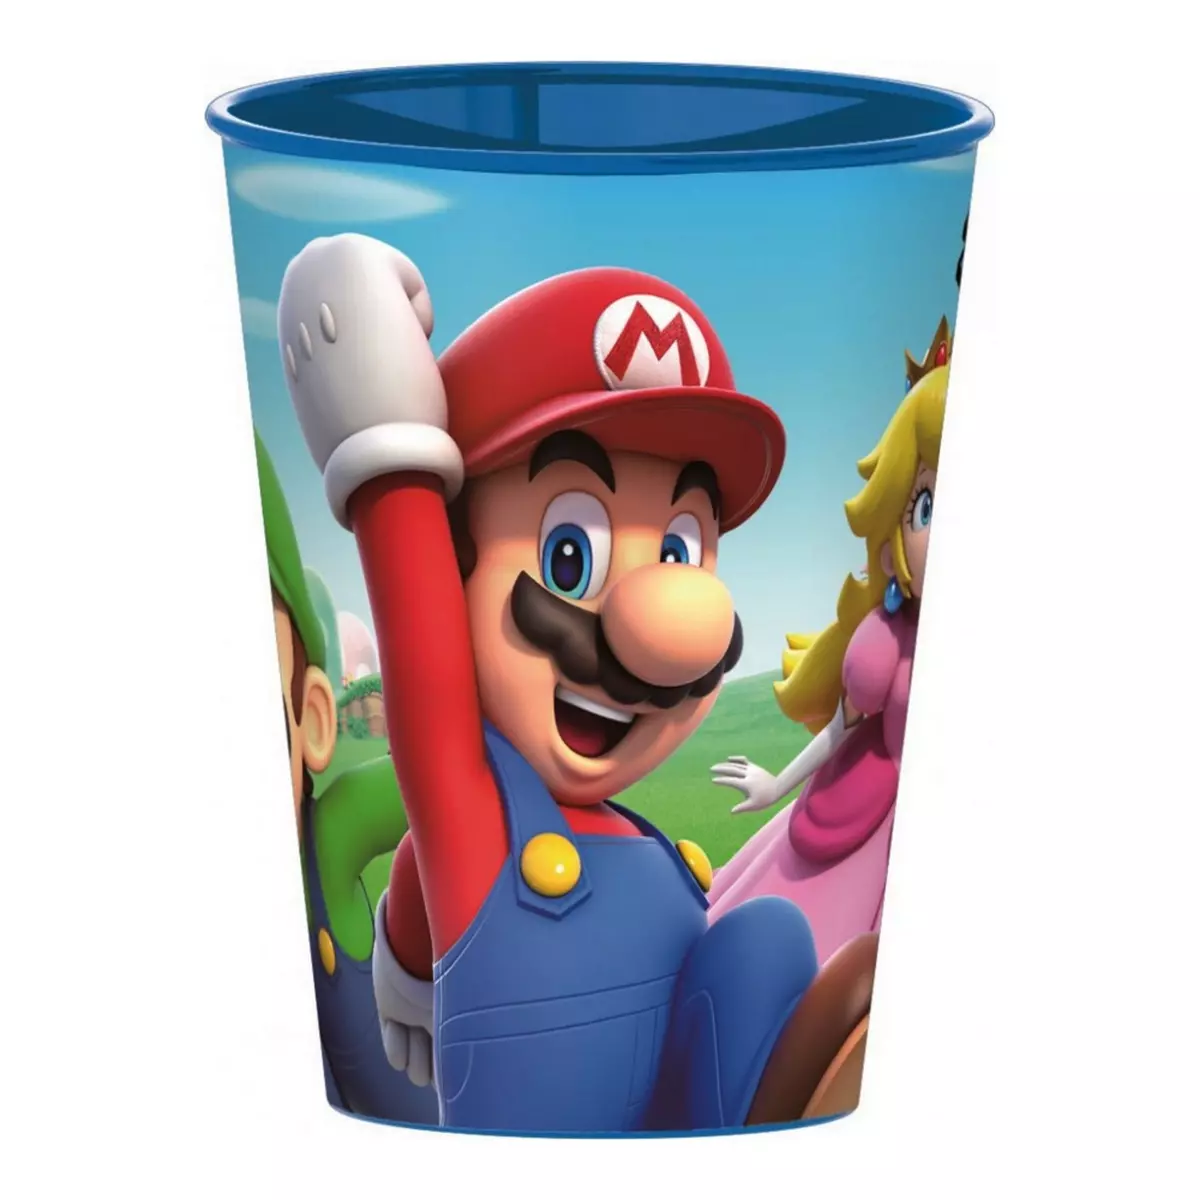  Gobelet Mario Bross Nintendo Disney verre enfant plastique